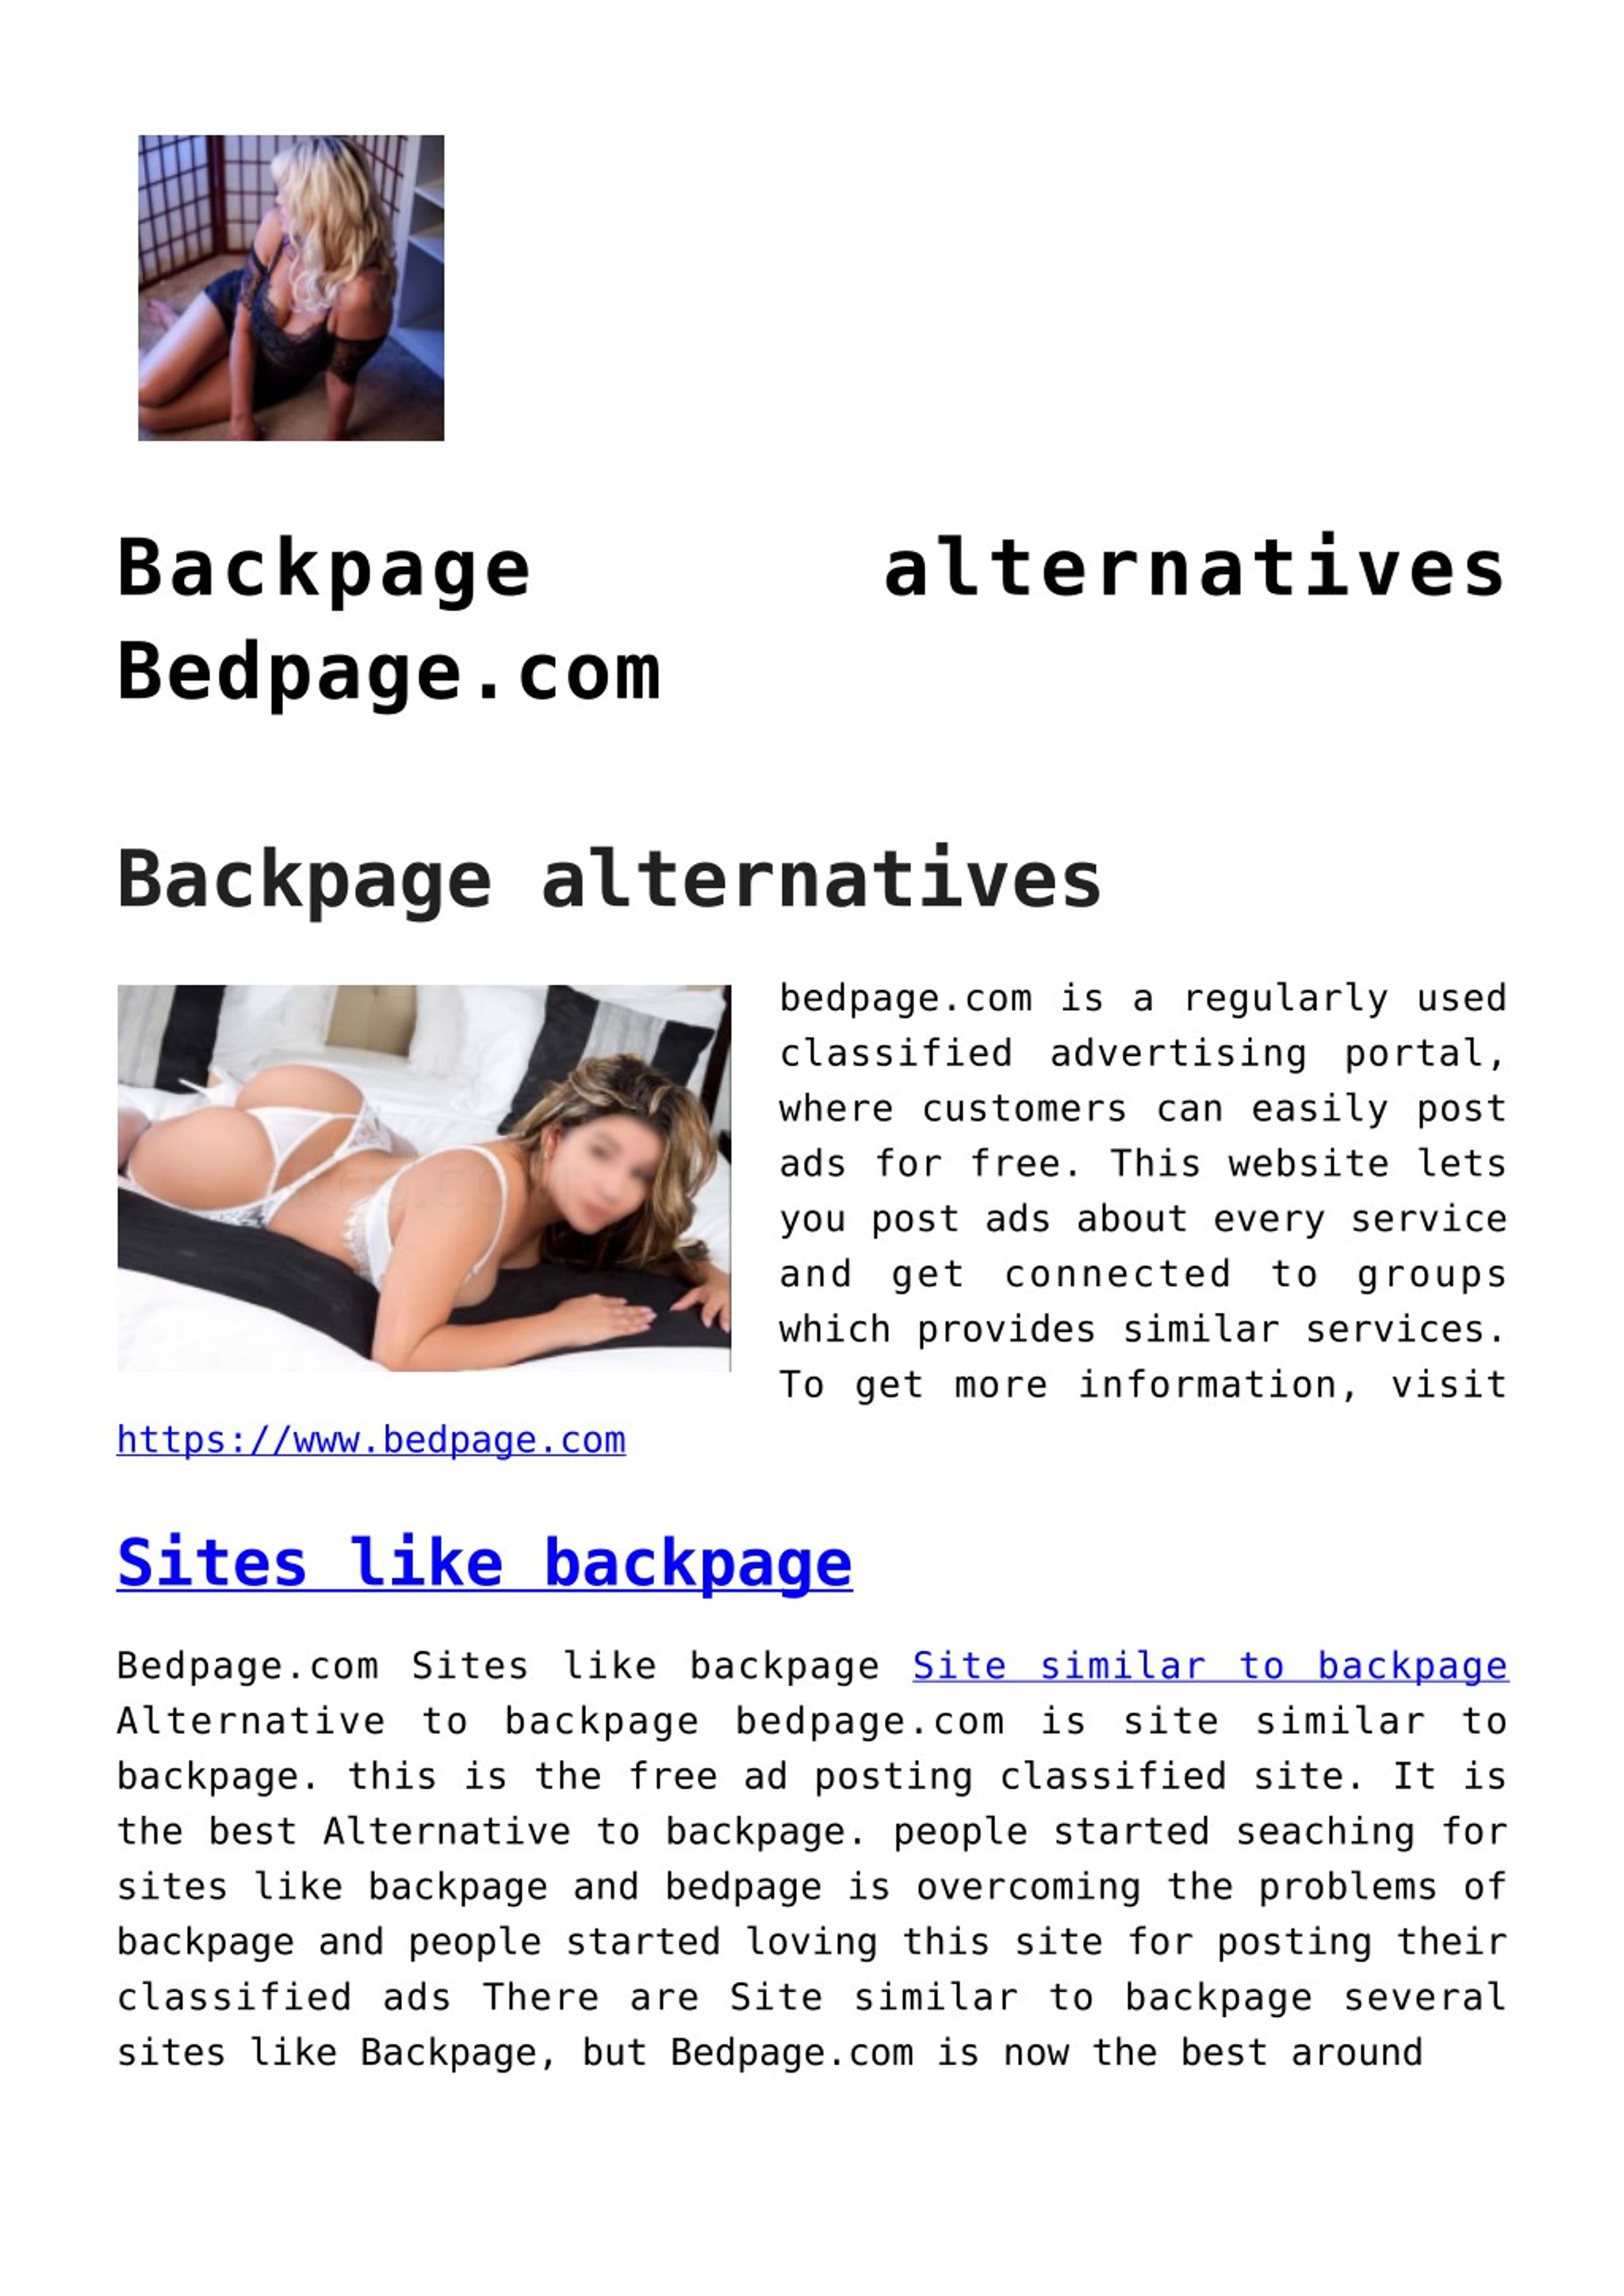 Bedpage com website